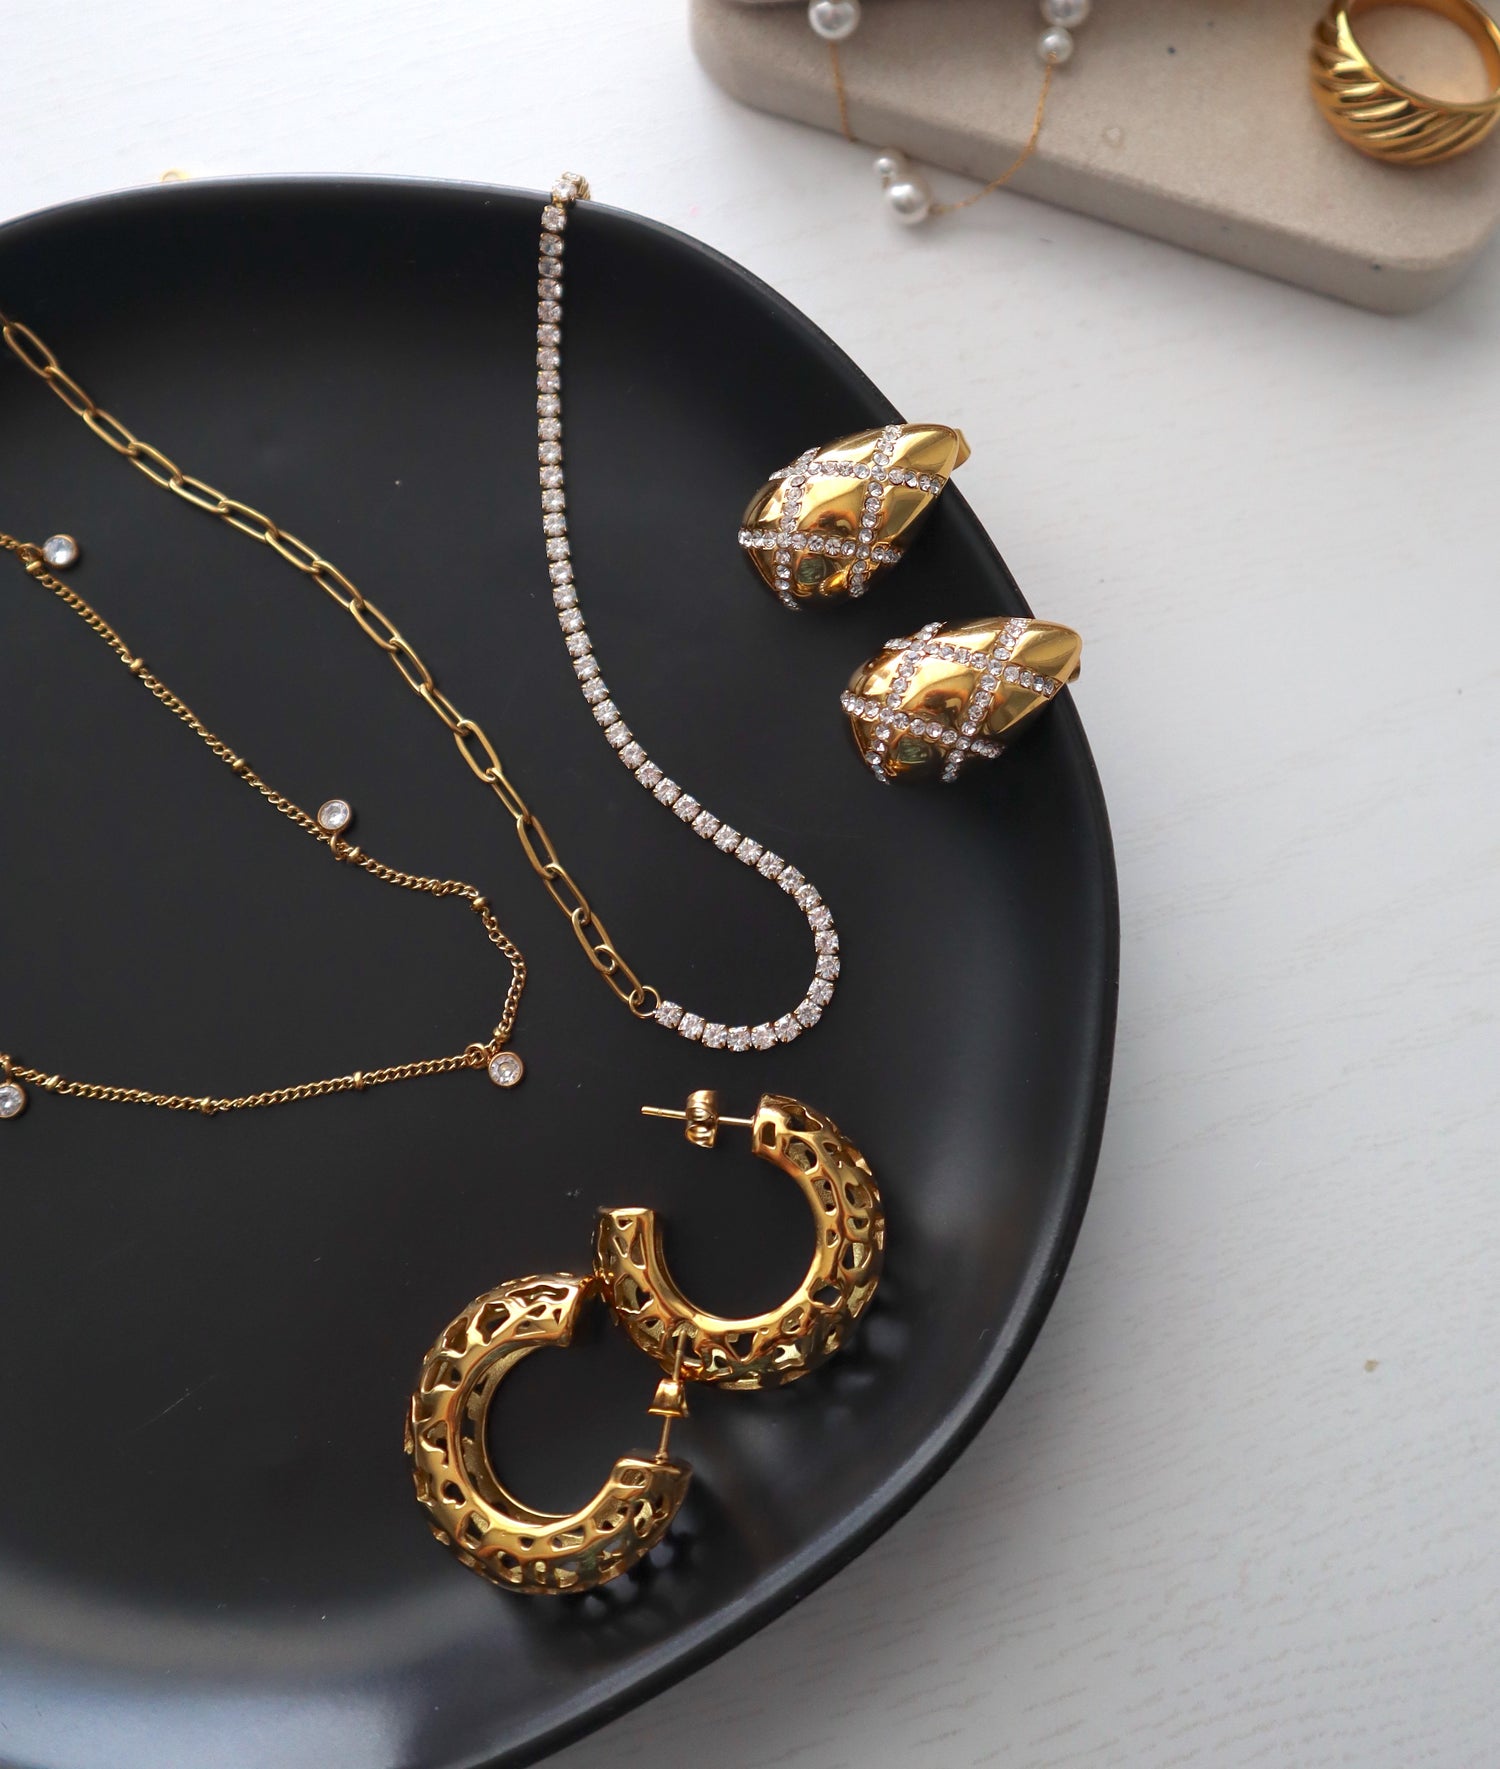 SHOP ALL - JESSA JEWELRY | GOLD JEWELRY; earrings, rings, necklaces, jewelry storage; gold jewelry for everyday wear, minimalistic jewelry